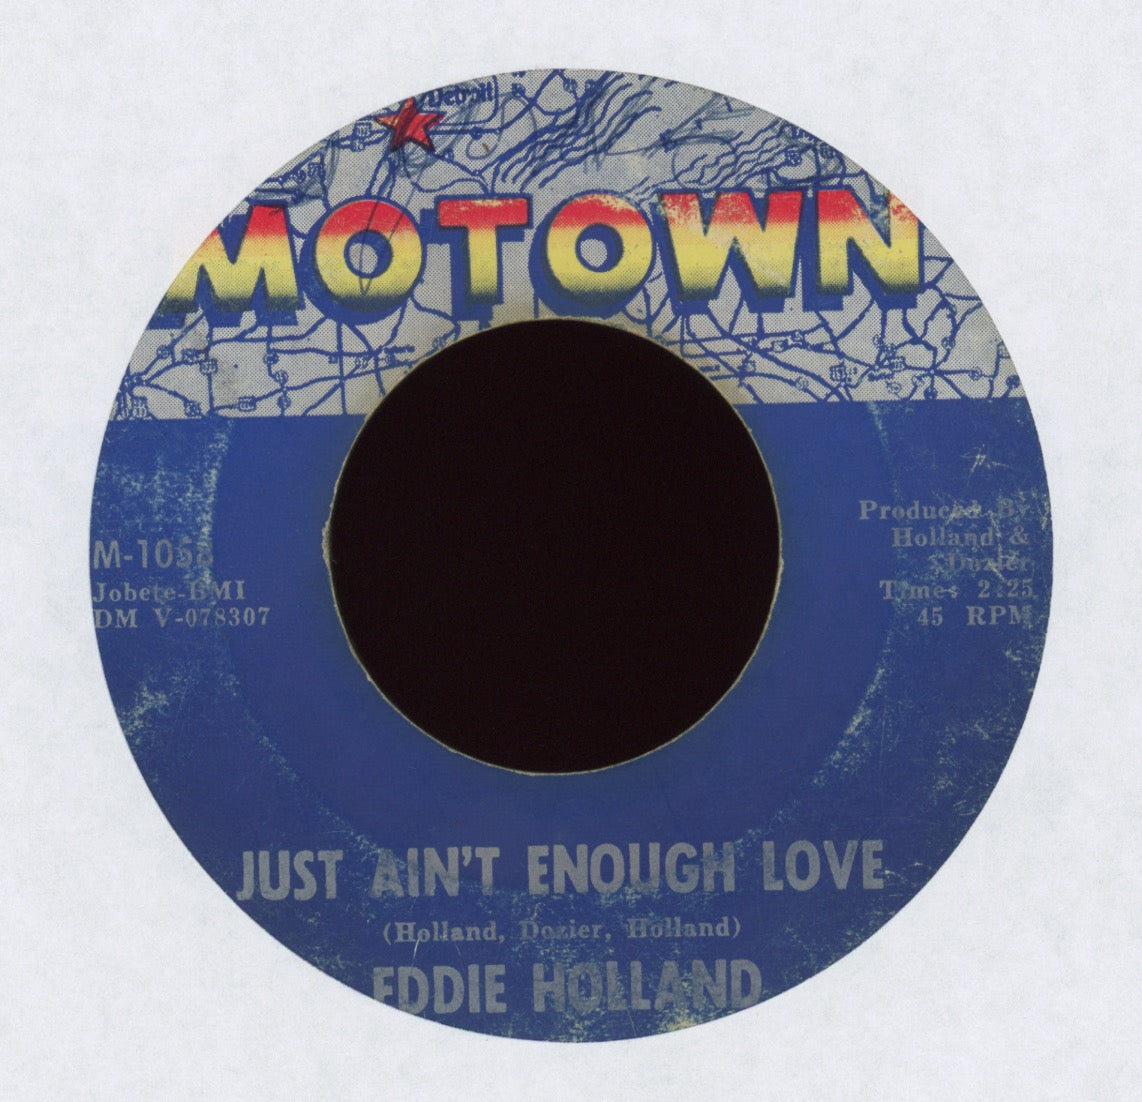 Edward Holland, Jr. - Just Ain't Enough Love on Motown